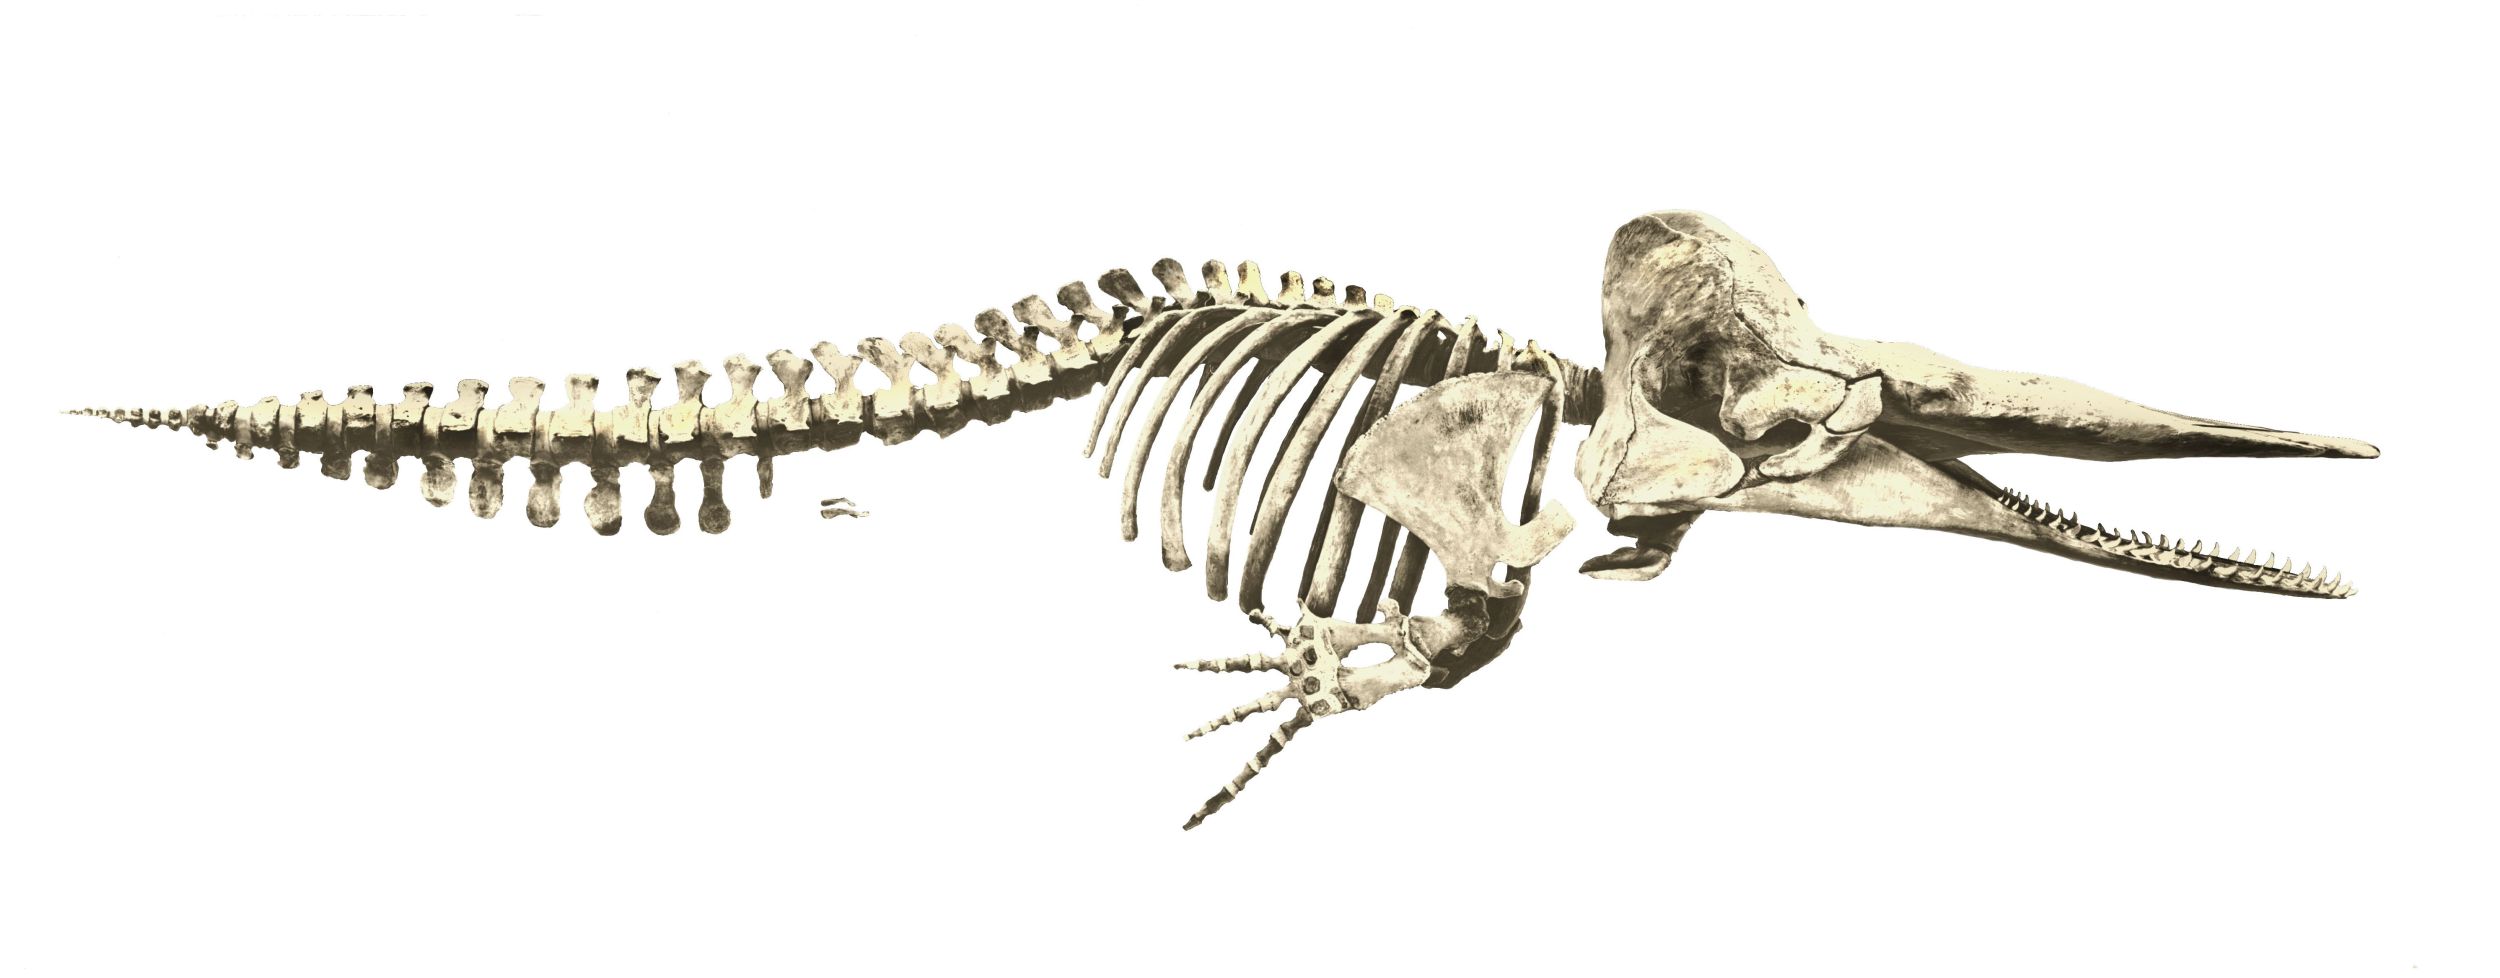 The Museon-Omniversum sperm whale